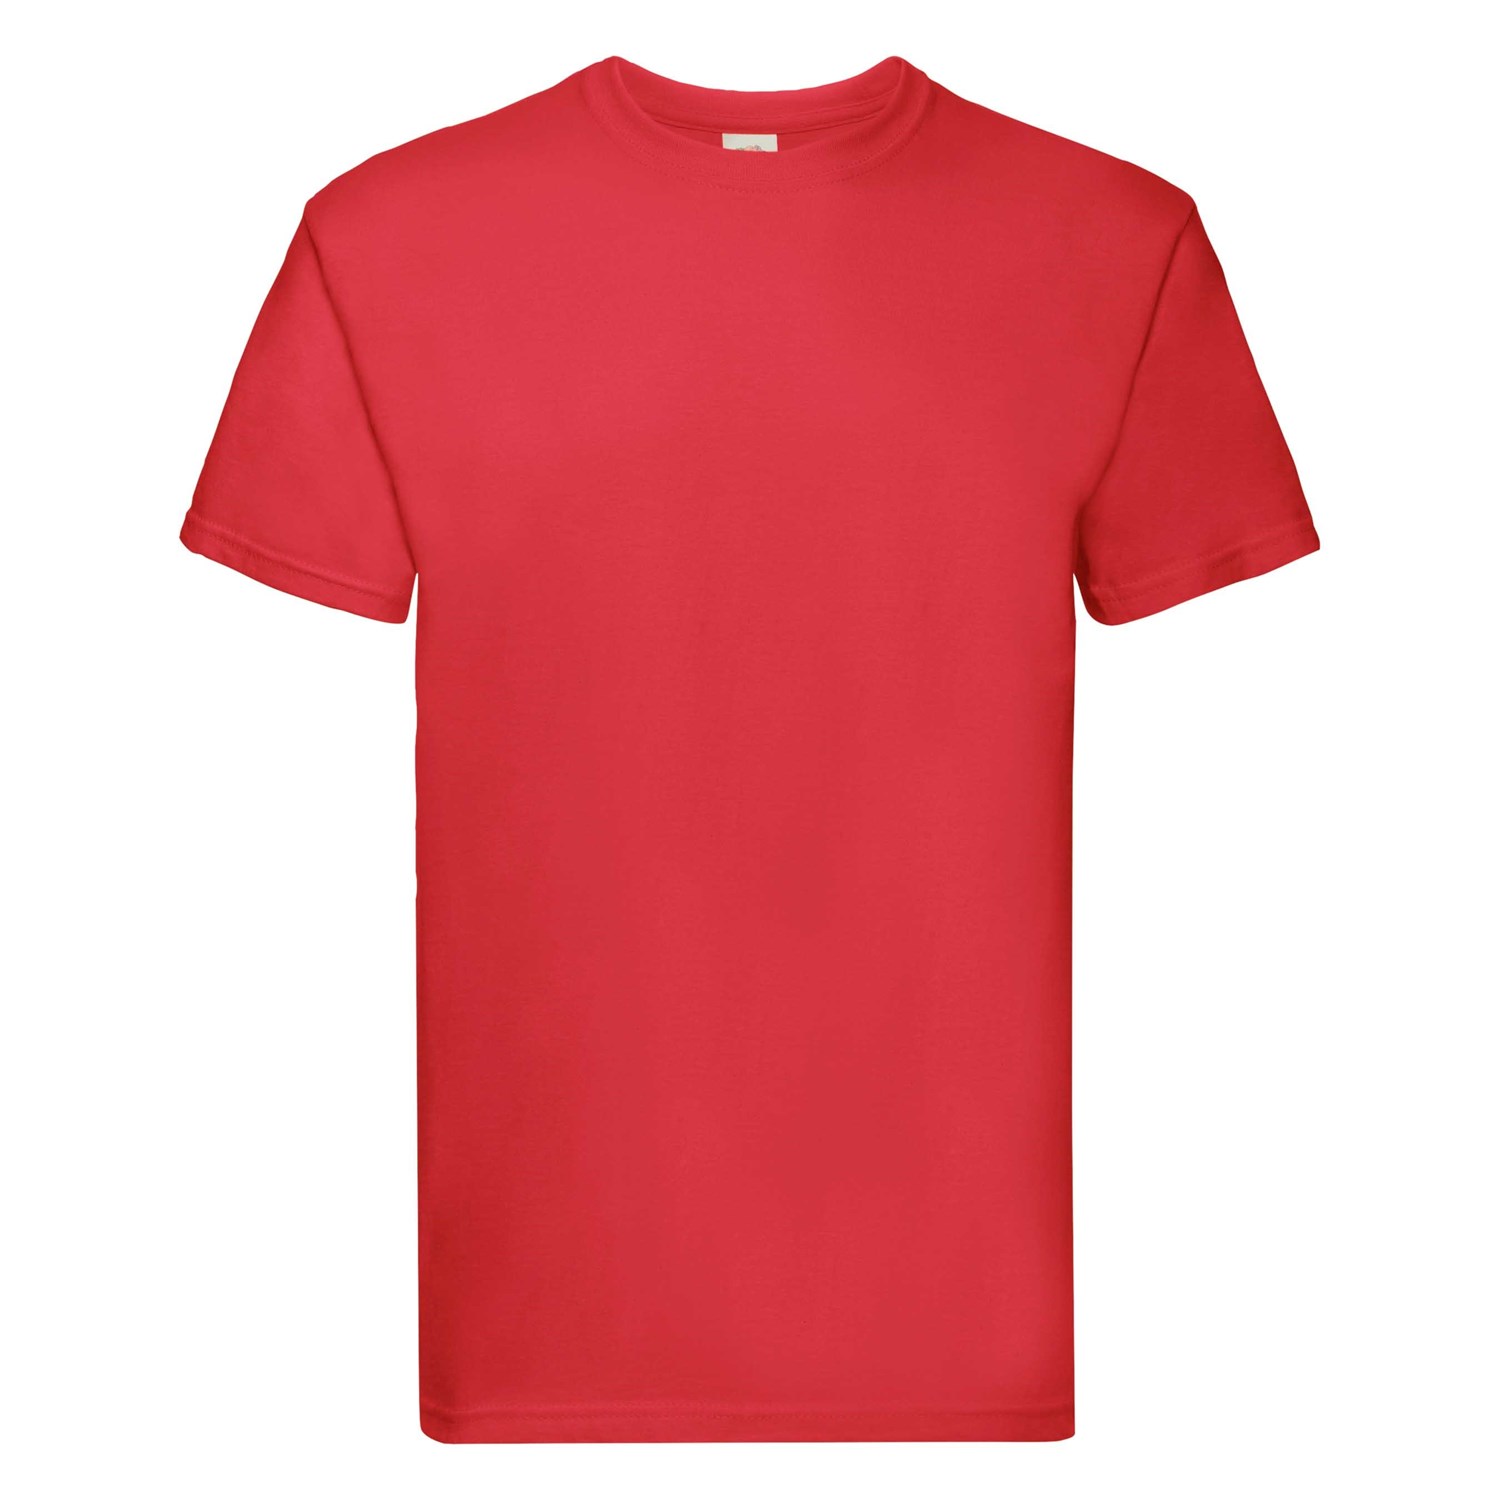 Super Premium Red Fruit of the Loom T-shirt